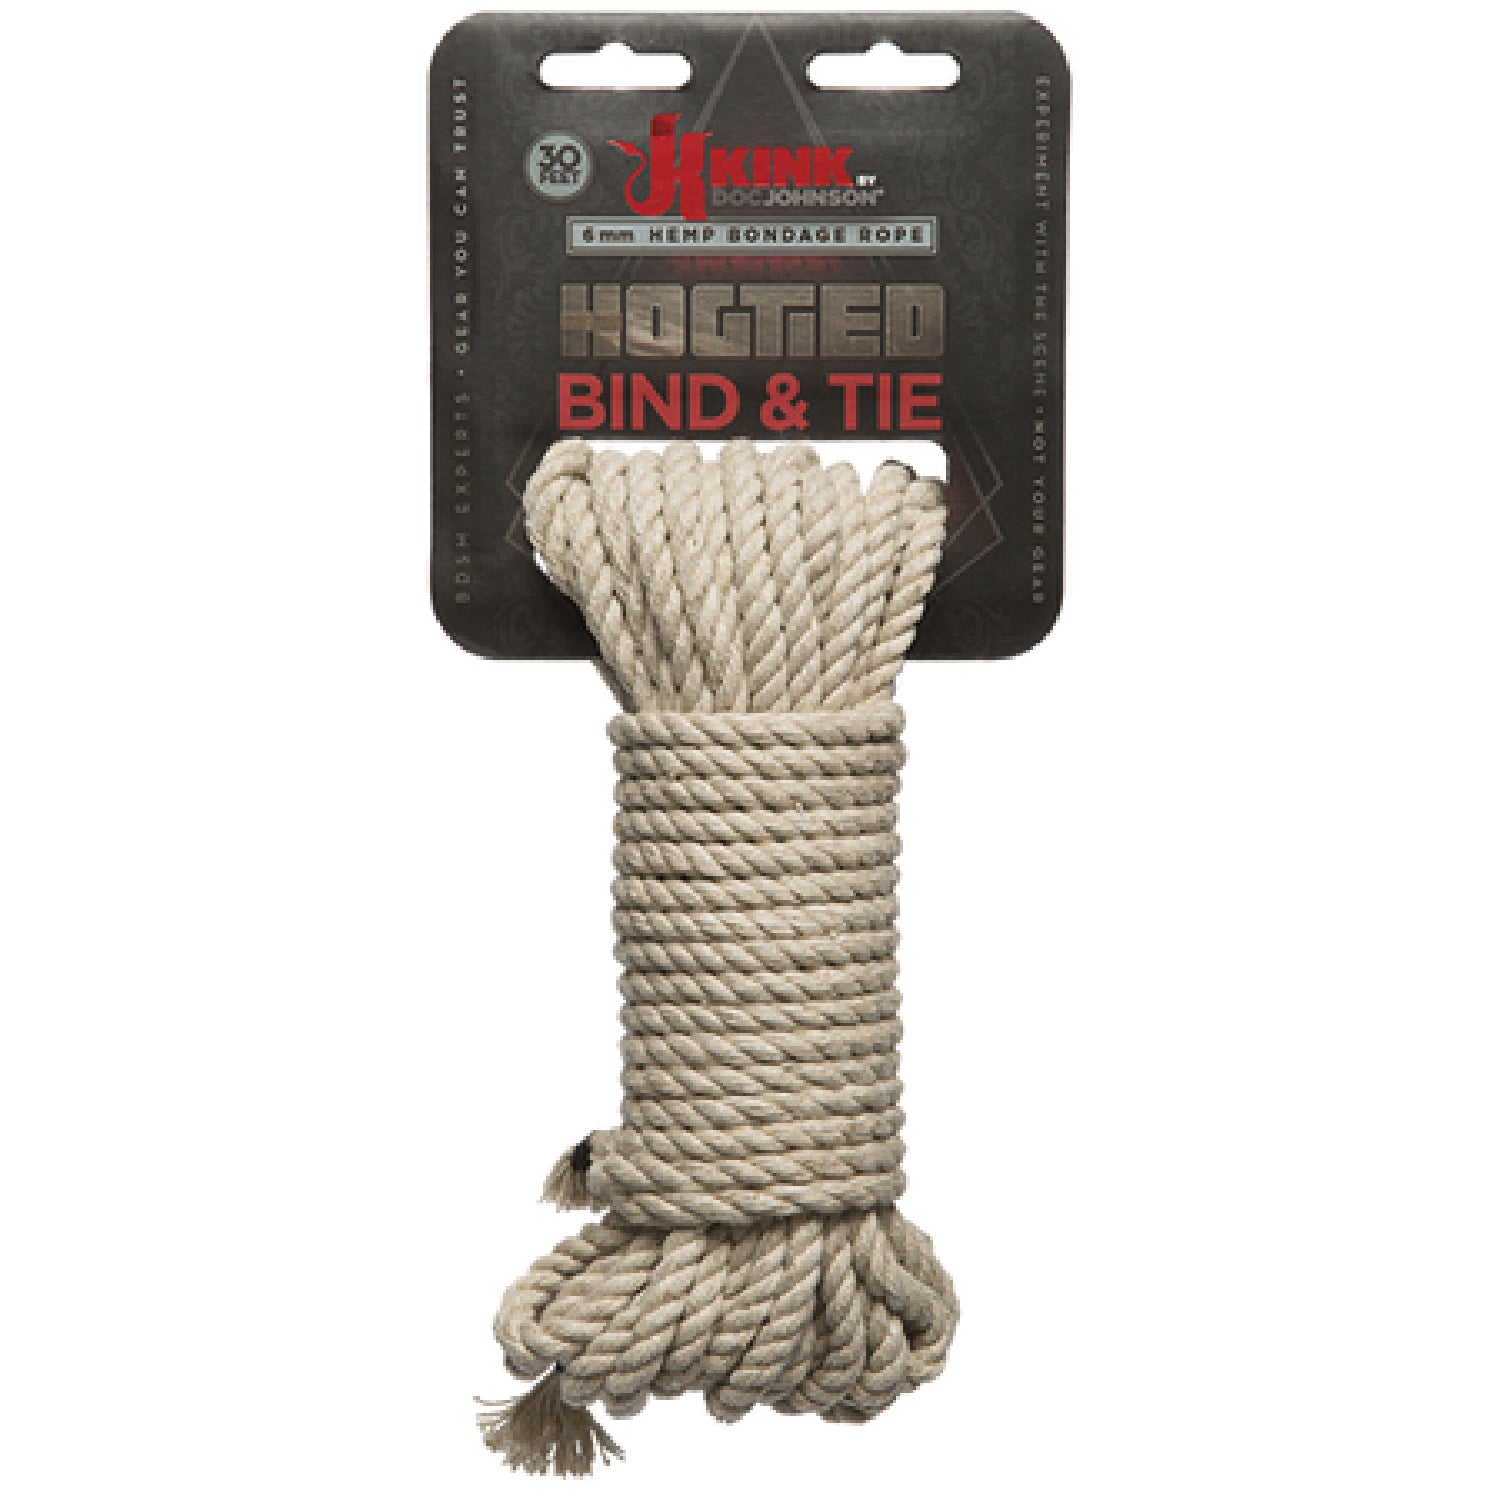 Bind & Tie - Hemp Bondage Rope - 30 Ft Default Title - Club X